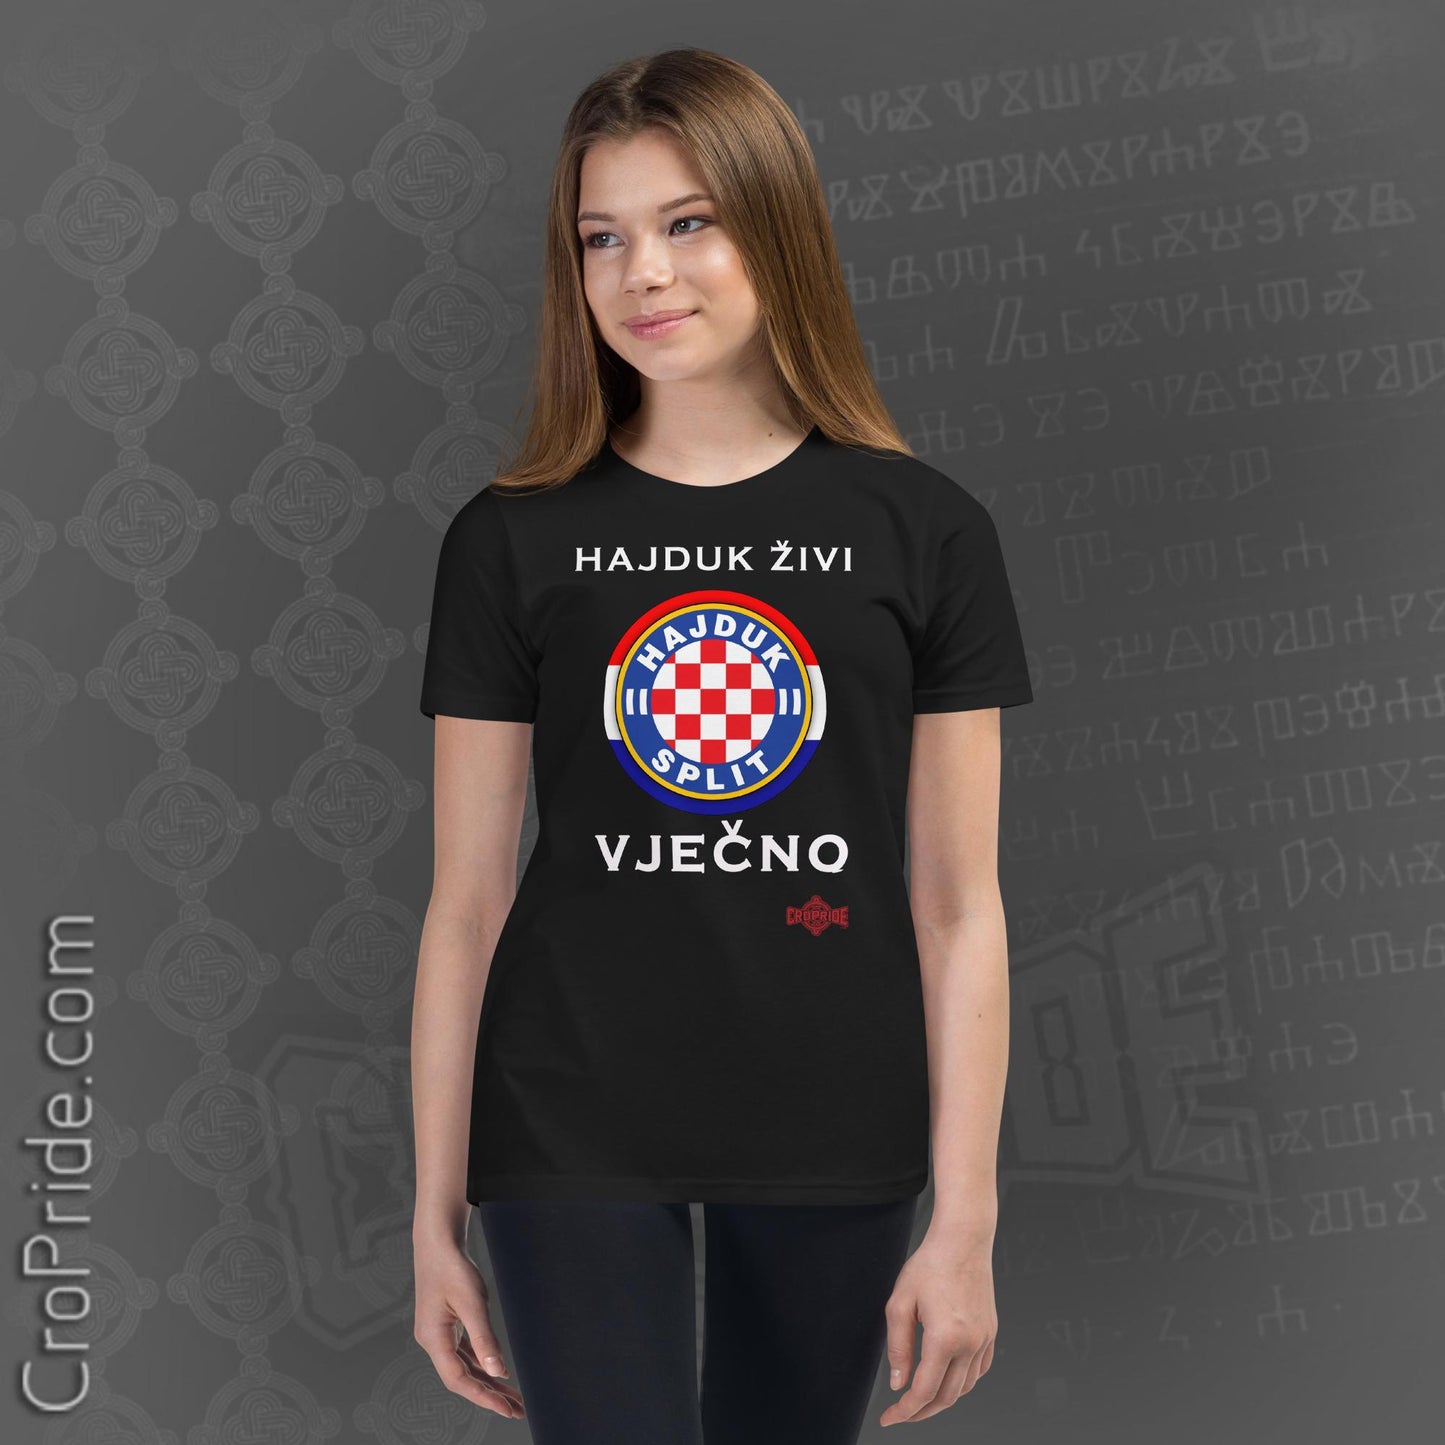 Hajduk Zivi Vjecno Youth T-Shirt - Celebrate The Undying Spirit of Hajduk Split